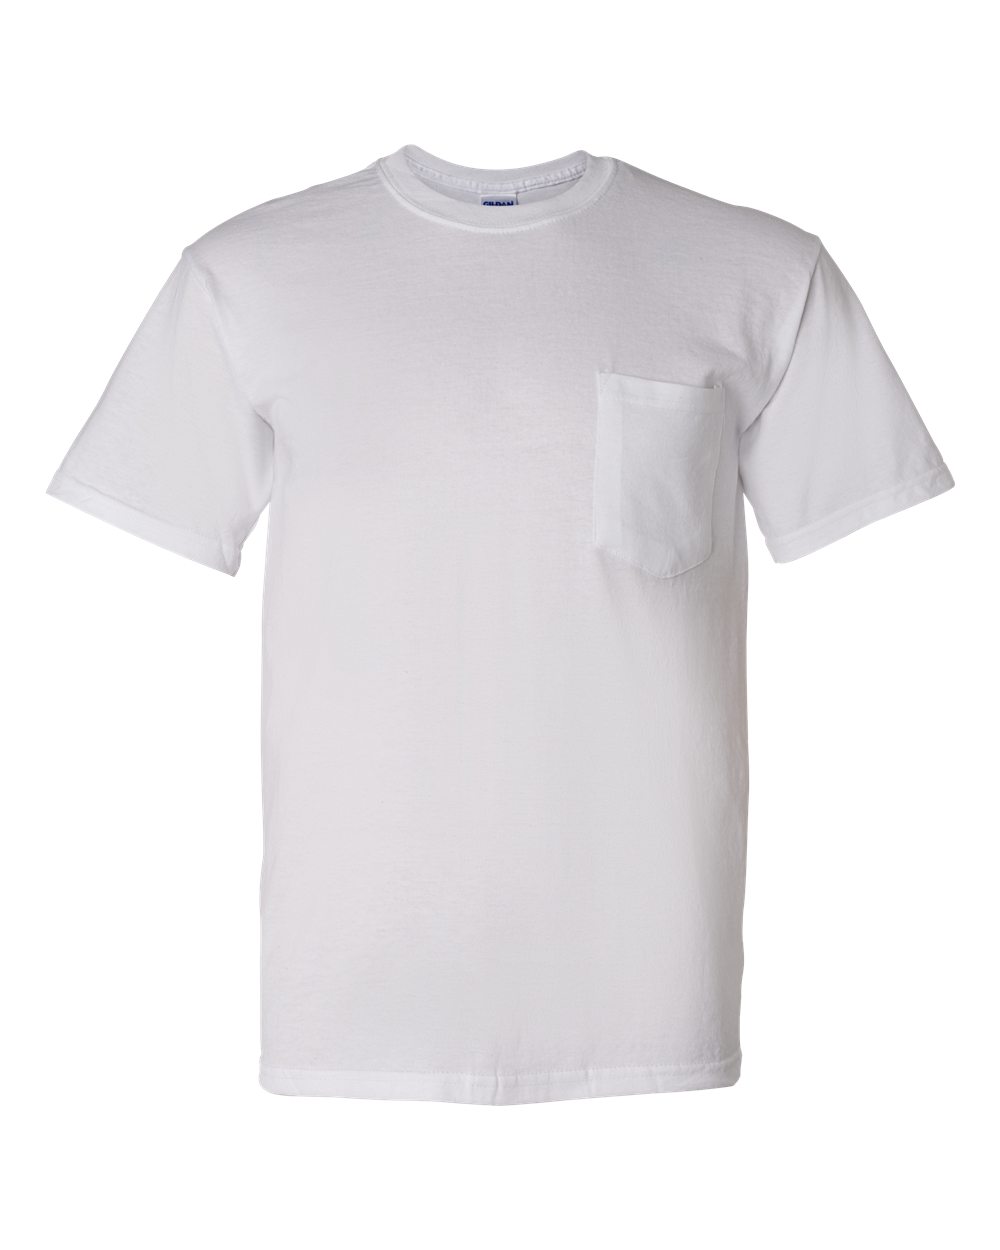 Gildan Mens DryBlend 50/50 T Shirt with Pocket Tee S M L XL 2XL 3XL 8300 